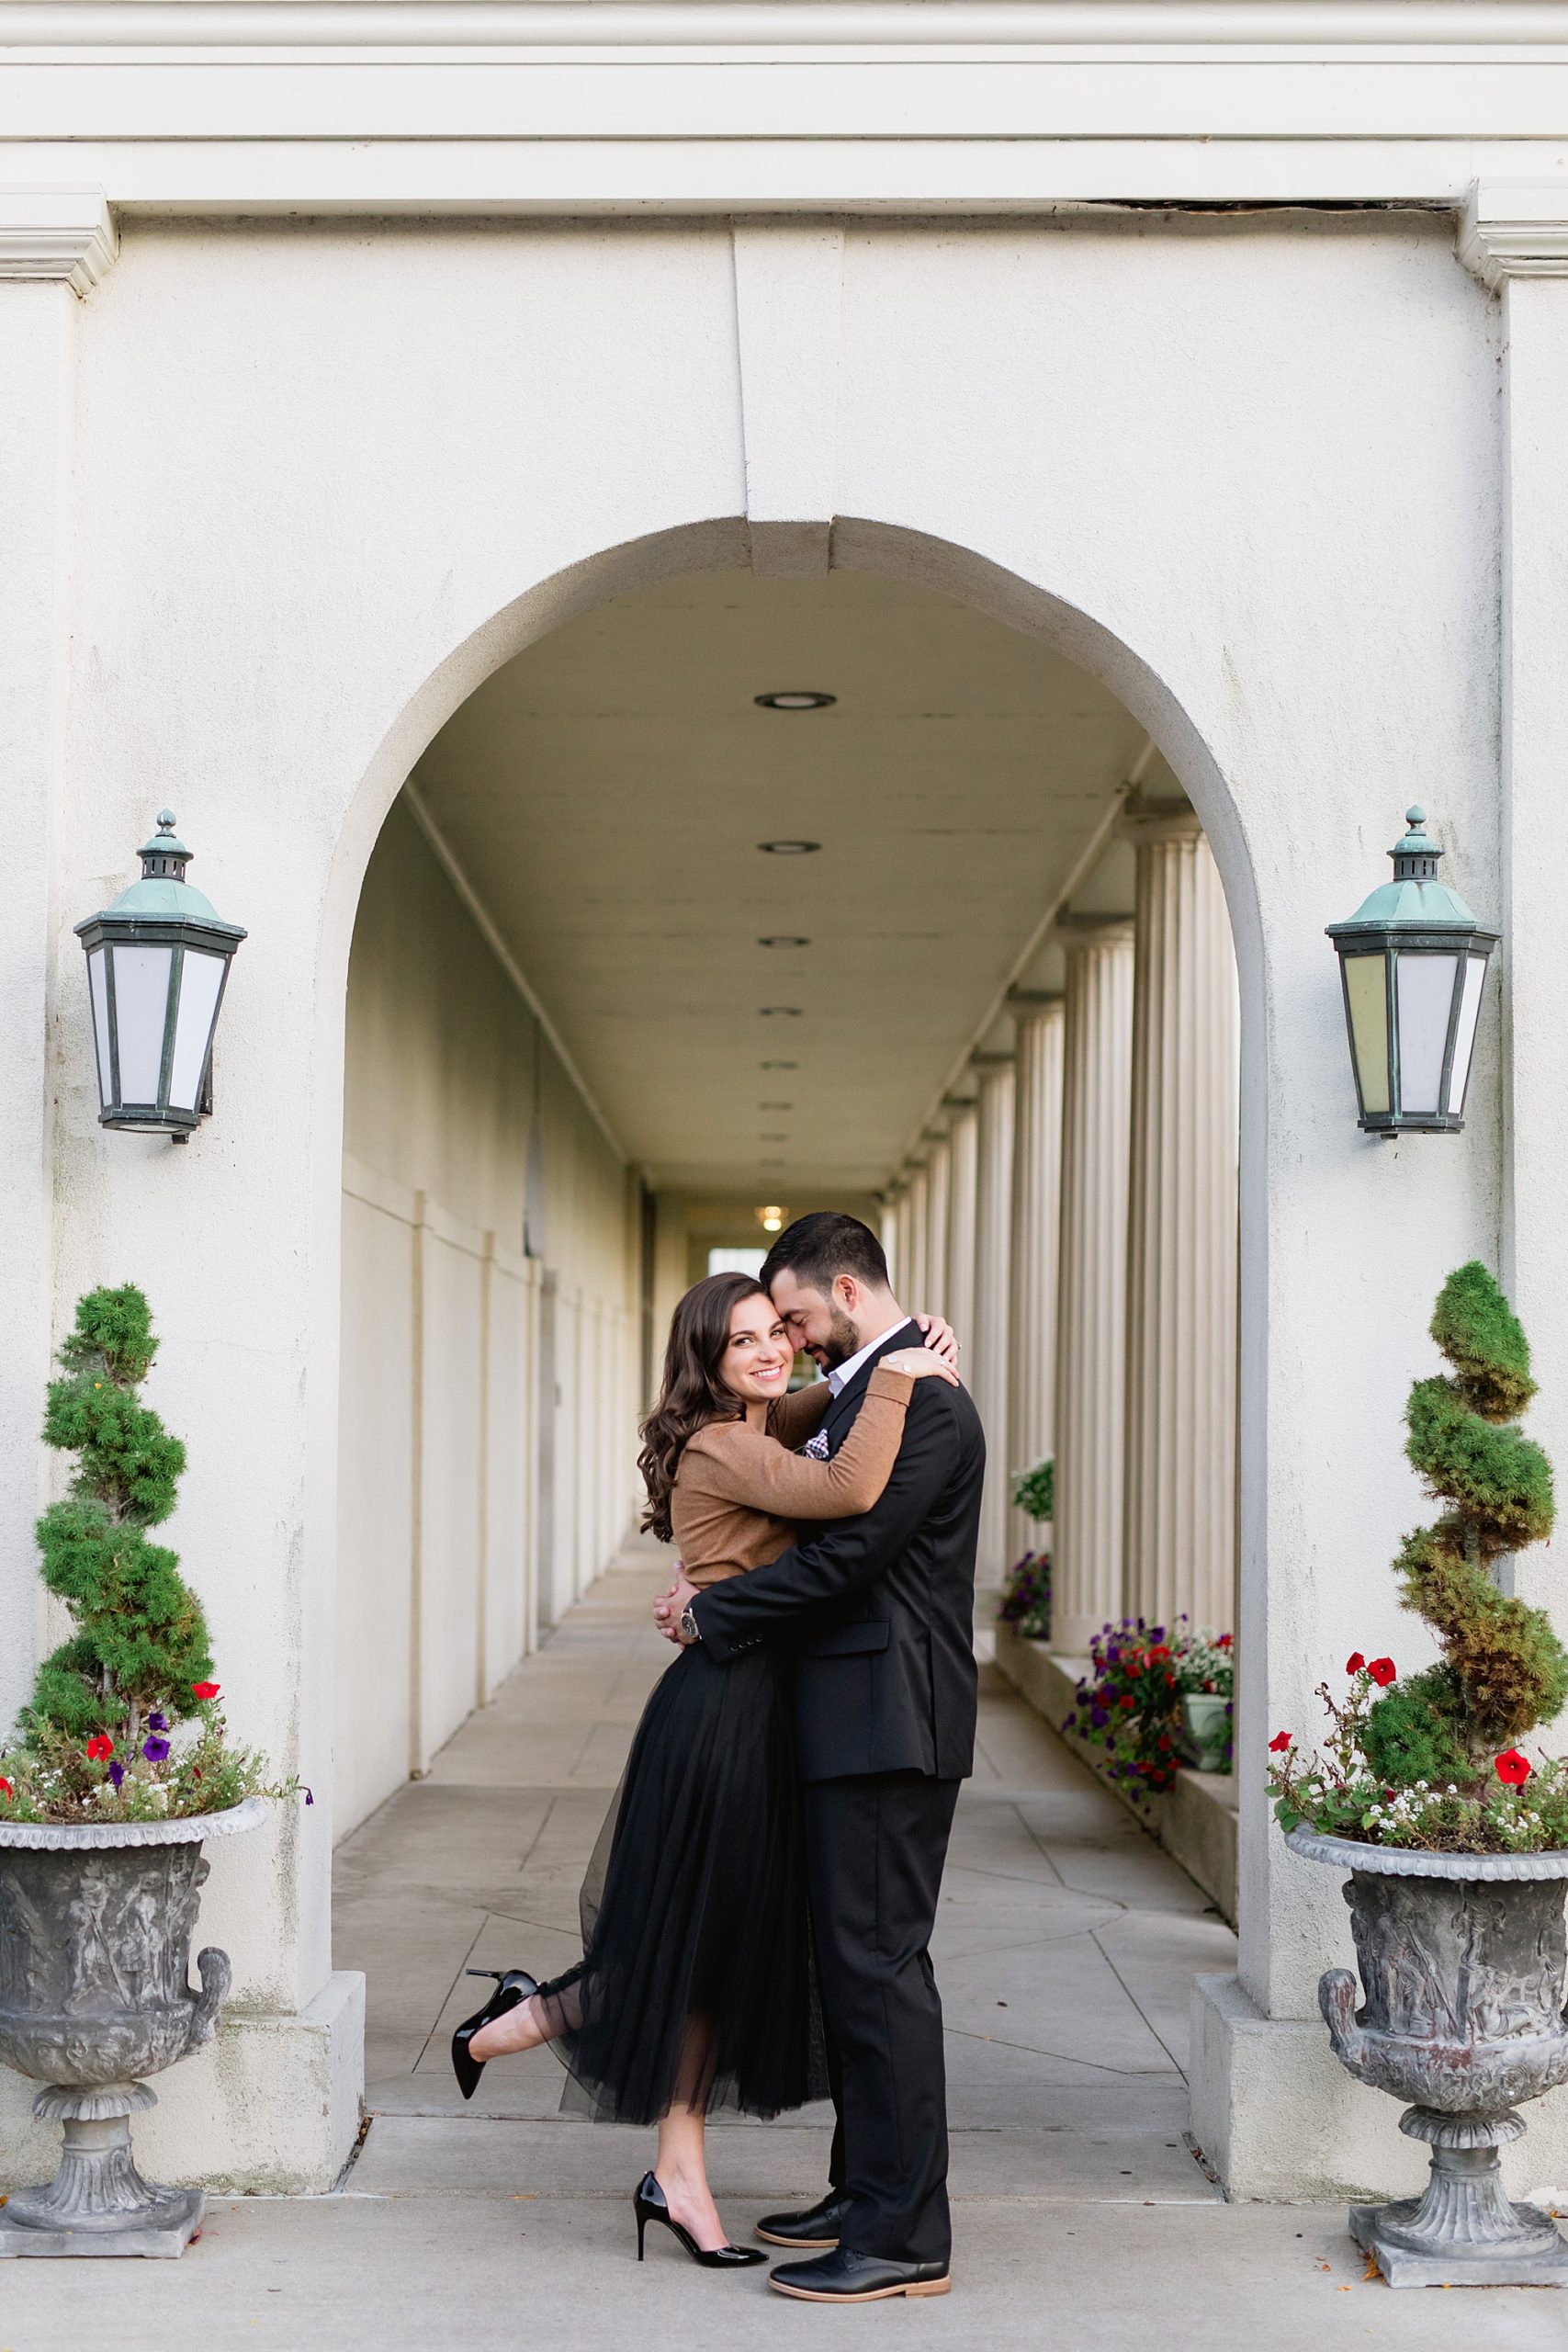 Black tulle skirt for Engagement Session at The War Memorial Grosse Pointe - Breanne Rochelle Photography